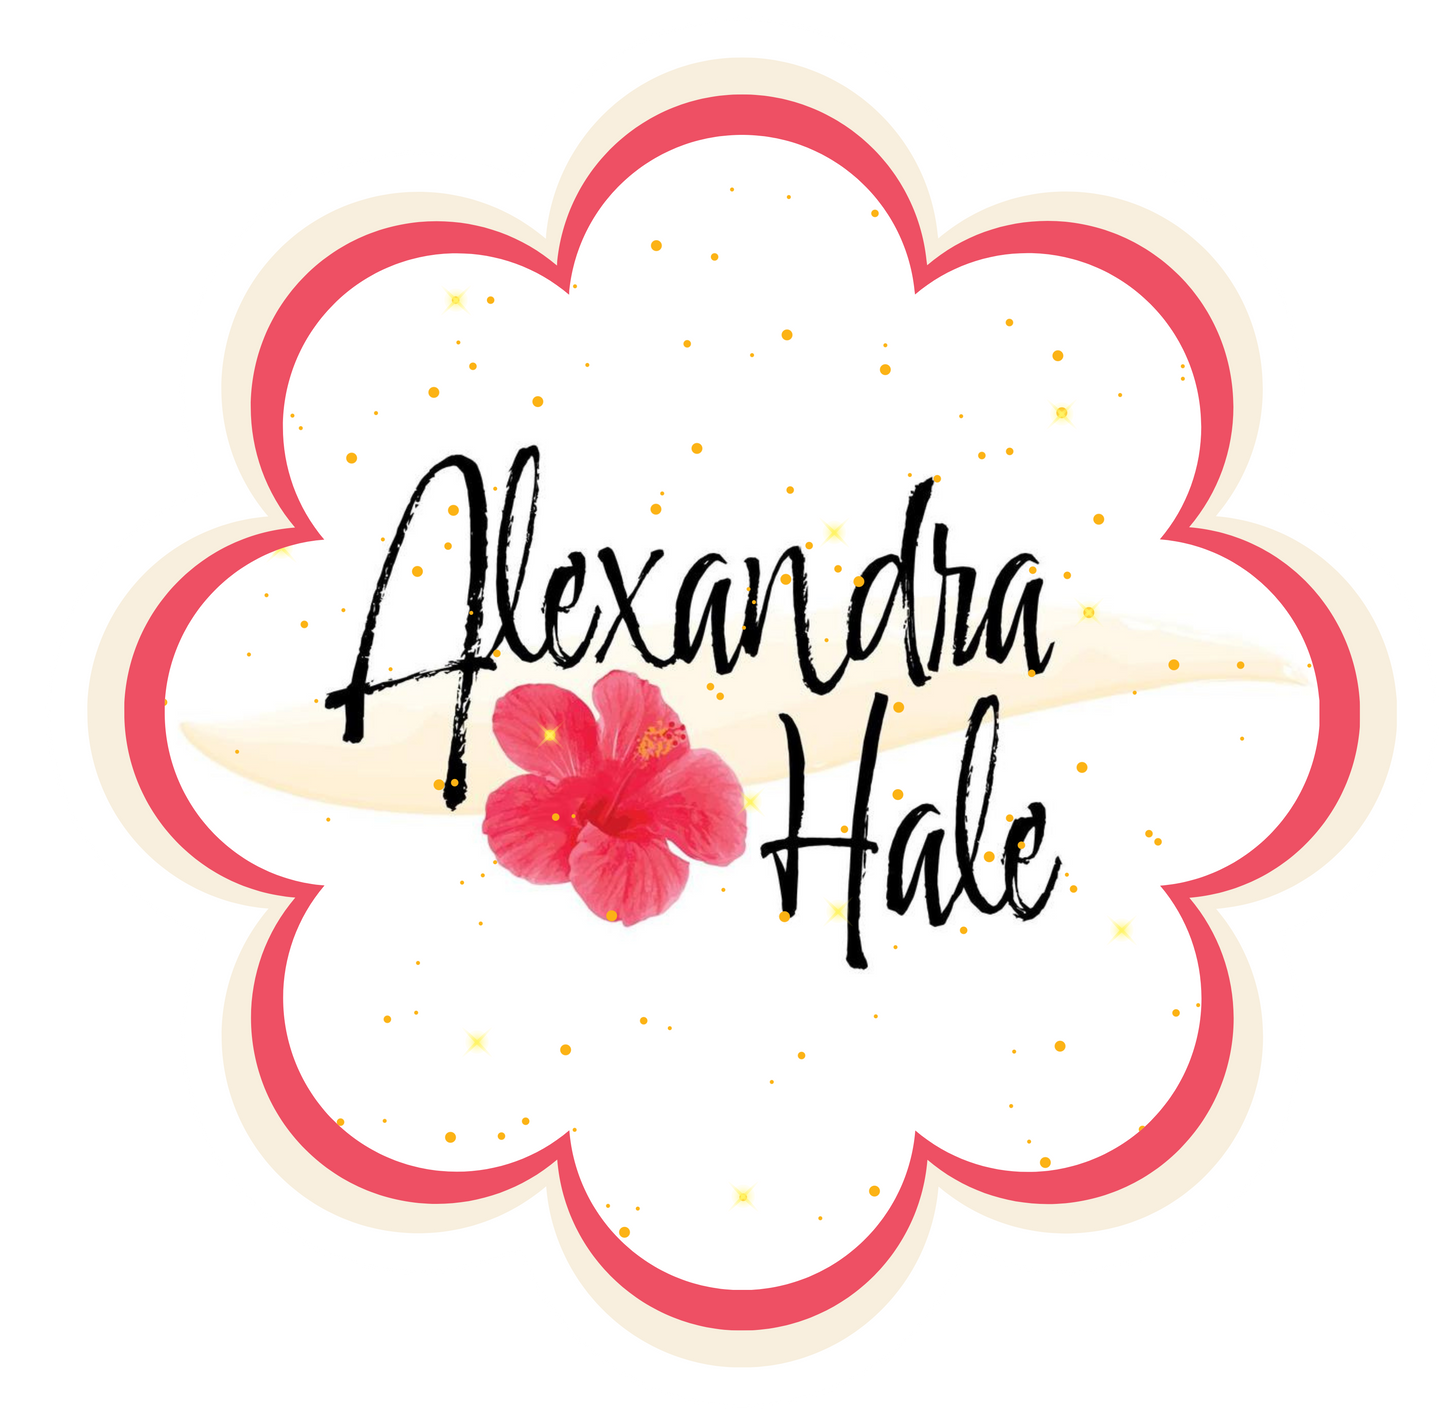 Alexandra Hale Collection